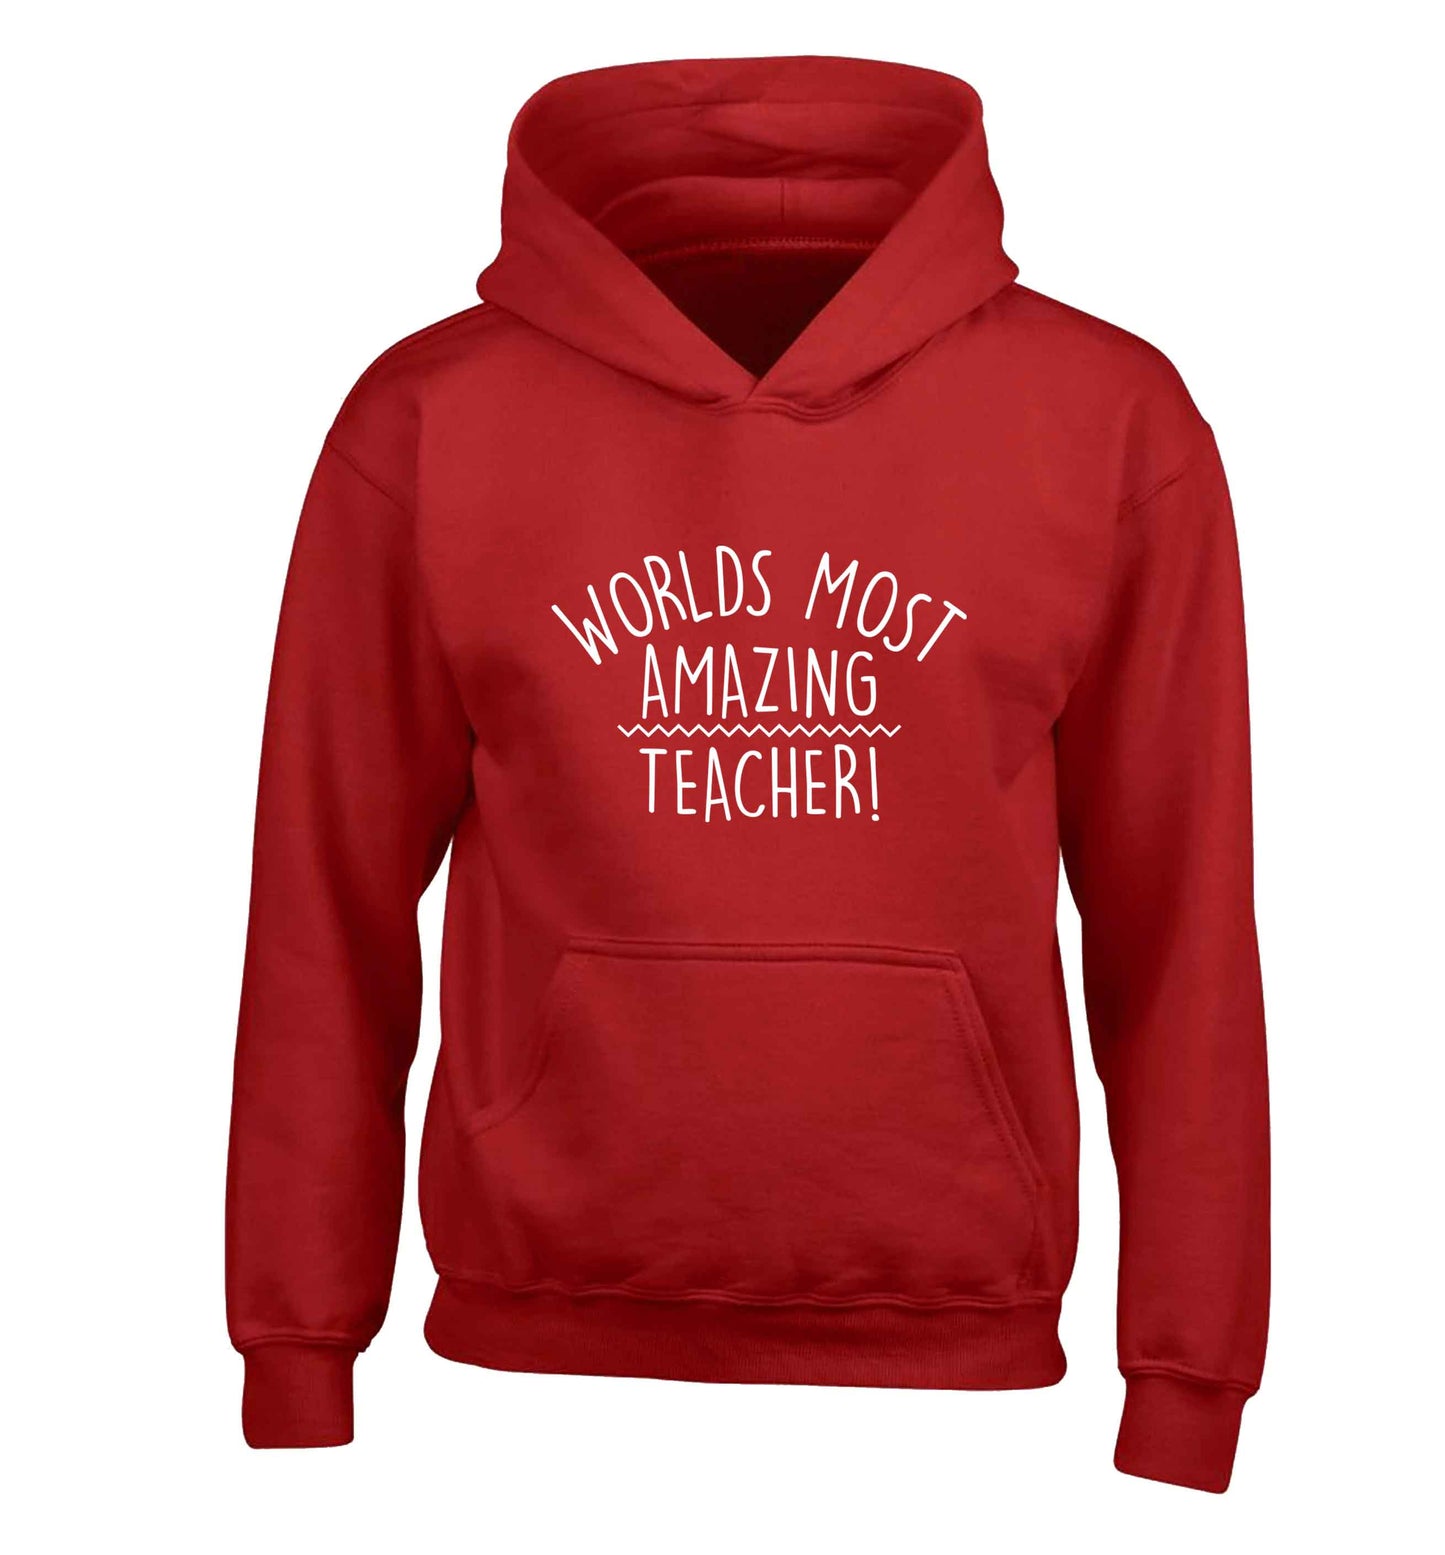 Worlds most amazing teacher children's red hoodie 12-13 Years